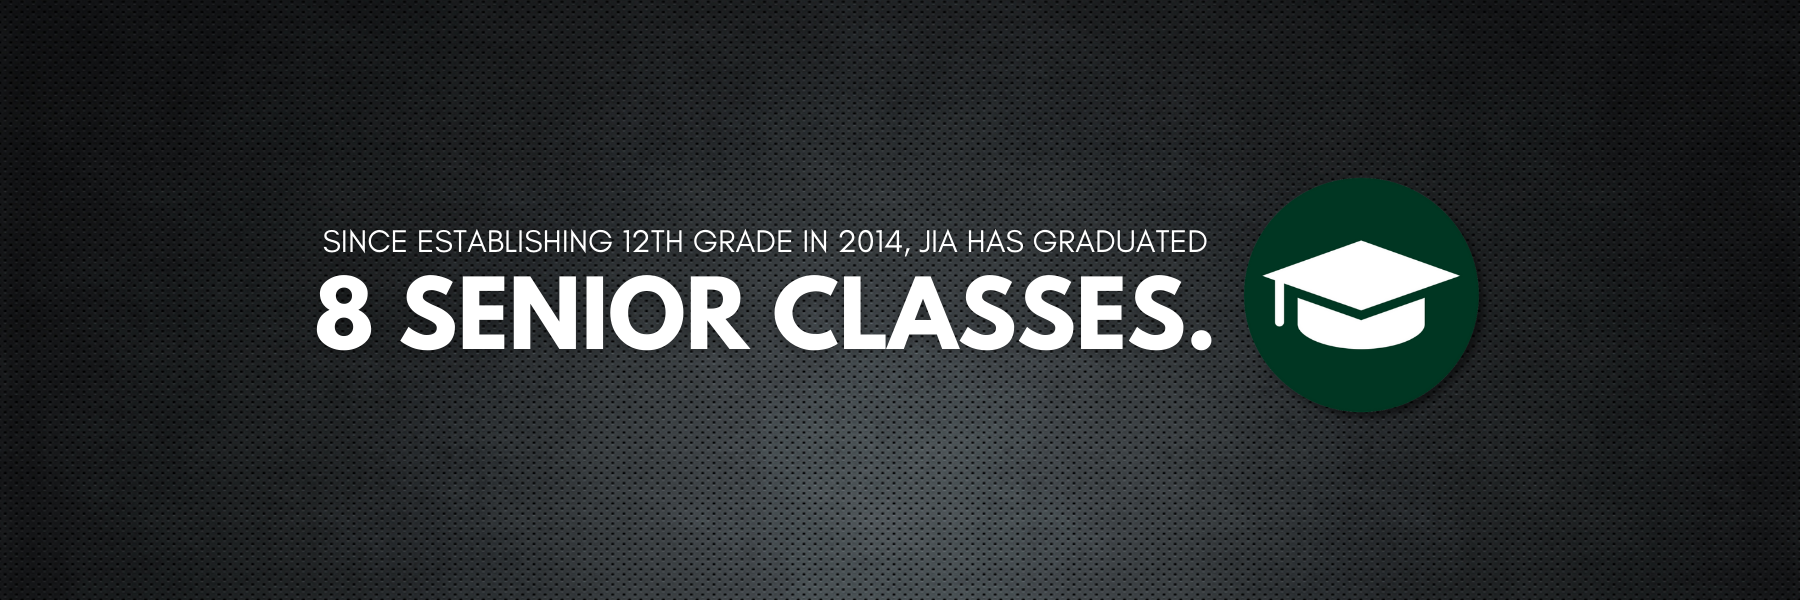 Since establishing 12th grade in 2014, JIA has graduated 8 senior classes.